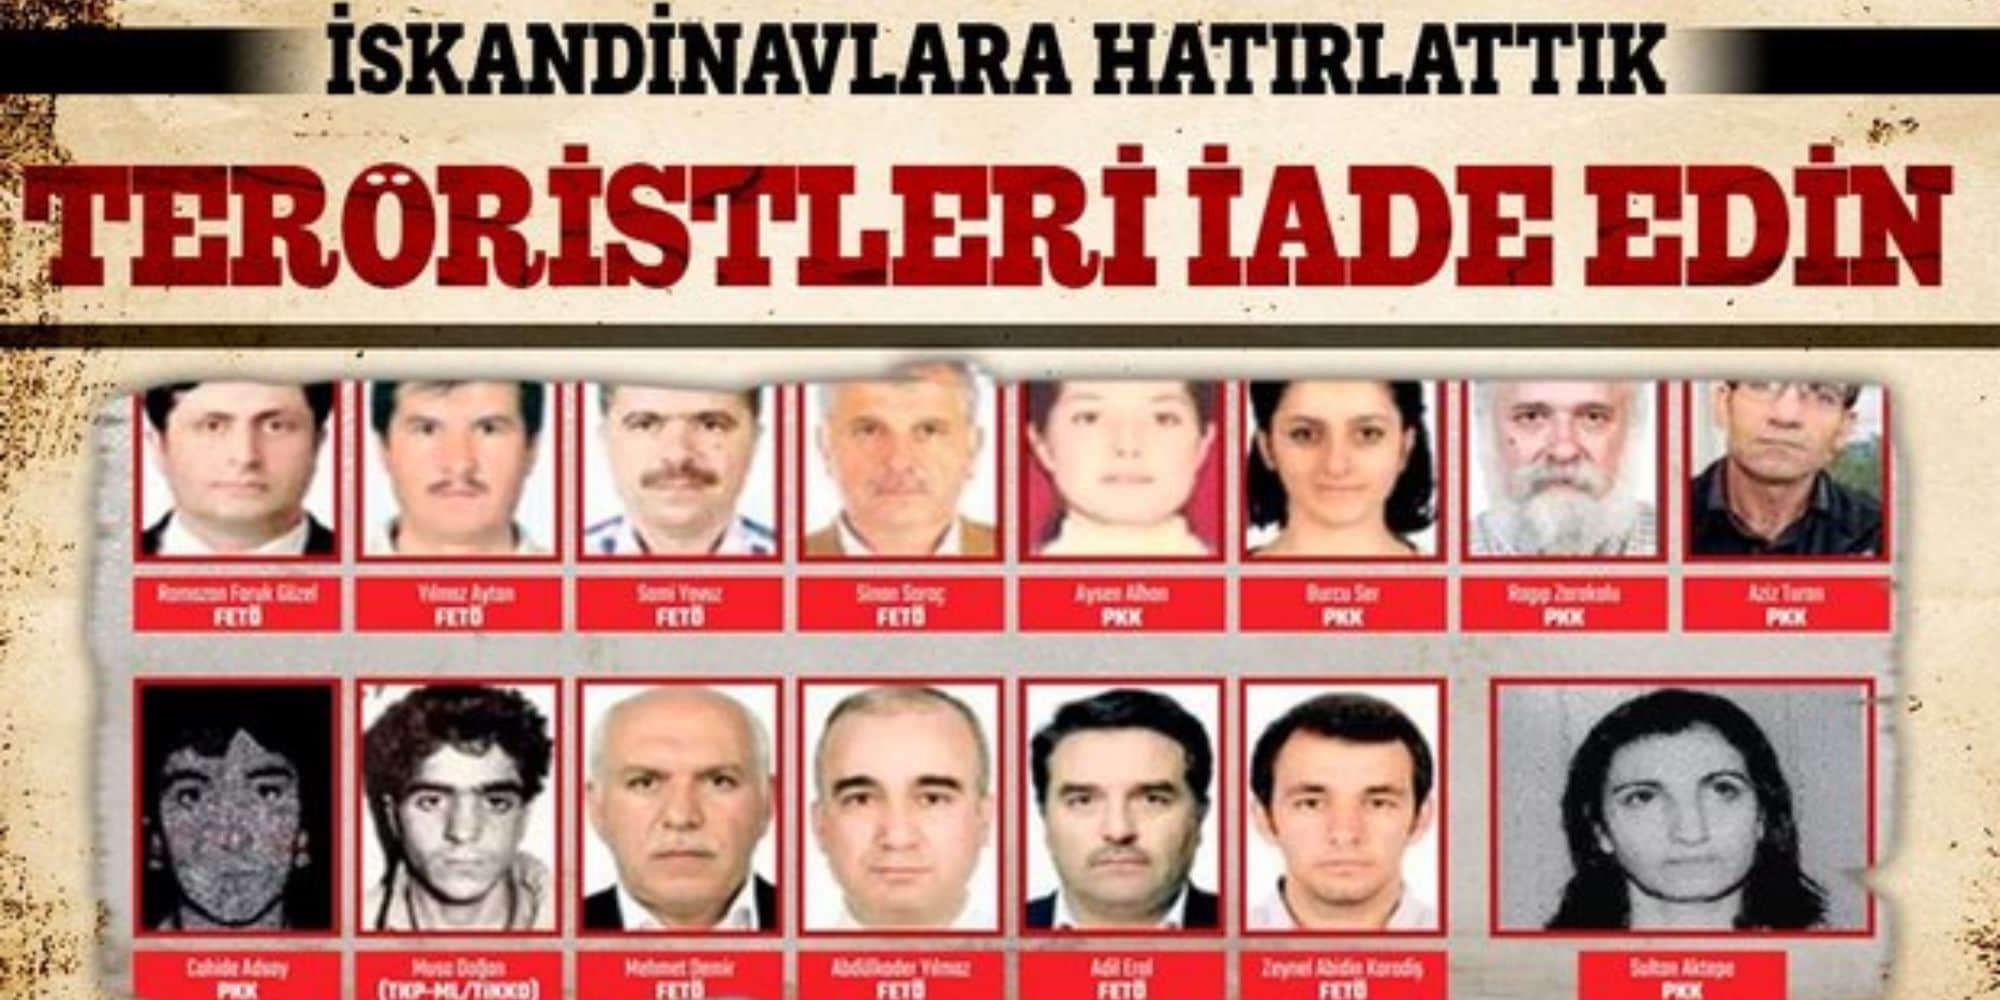 H lista tis tourkias pkk feto 6 7 22 1 - Η Τουρκία έστειλε επίσημο αίτημα σε Σουηδία – Φινλανδία για έκδοση μελών των ΡΚΚ και FETO